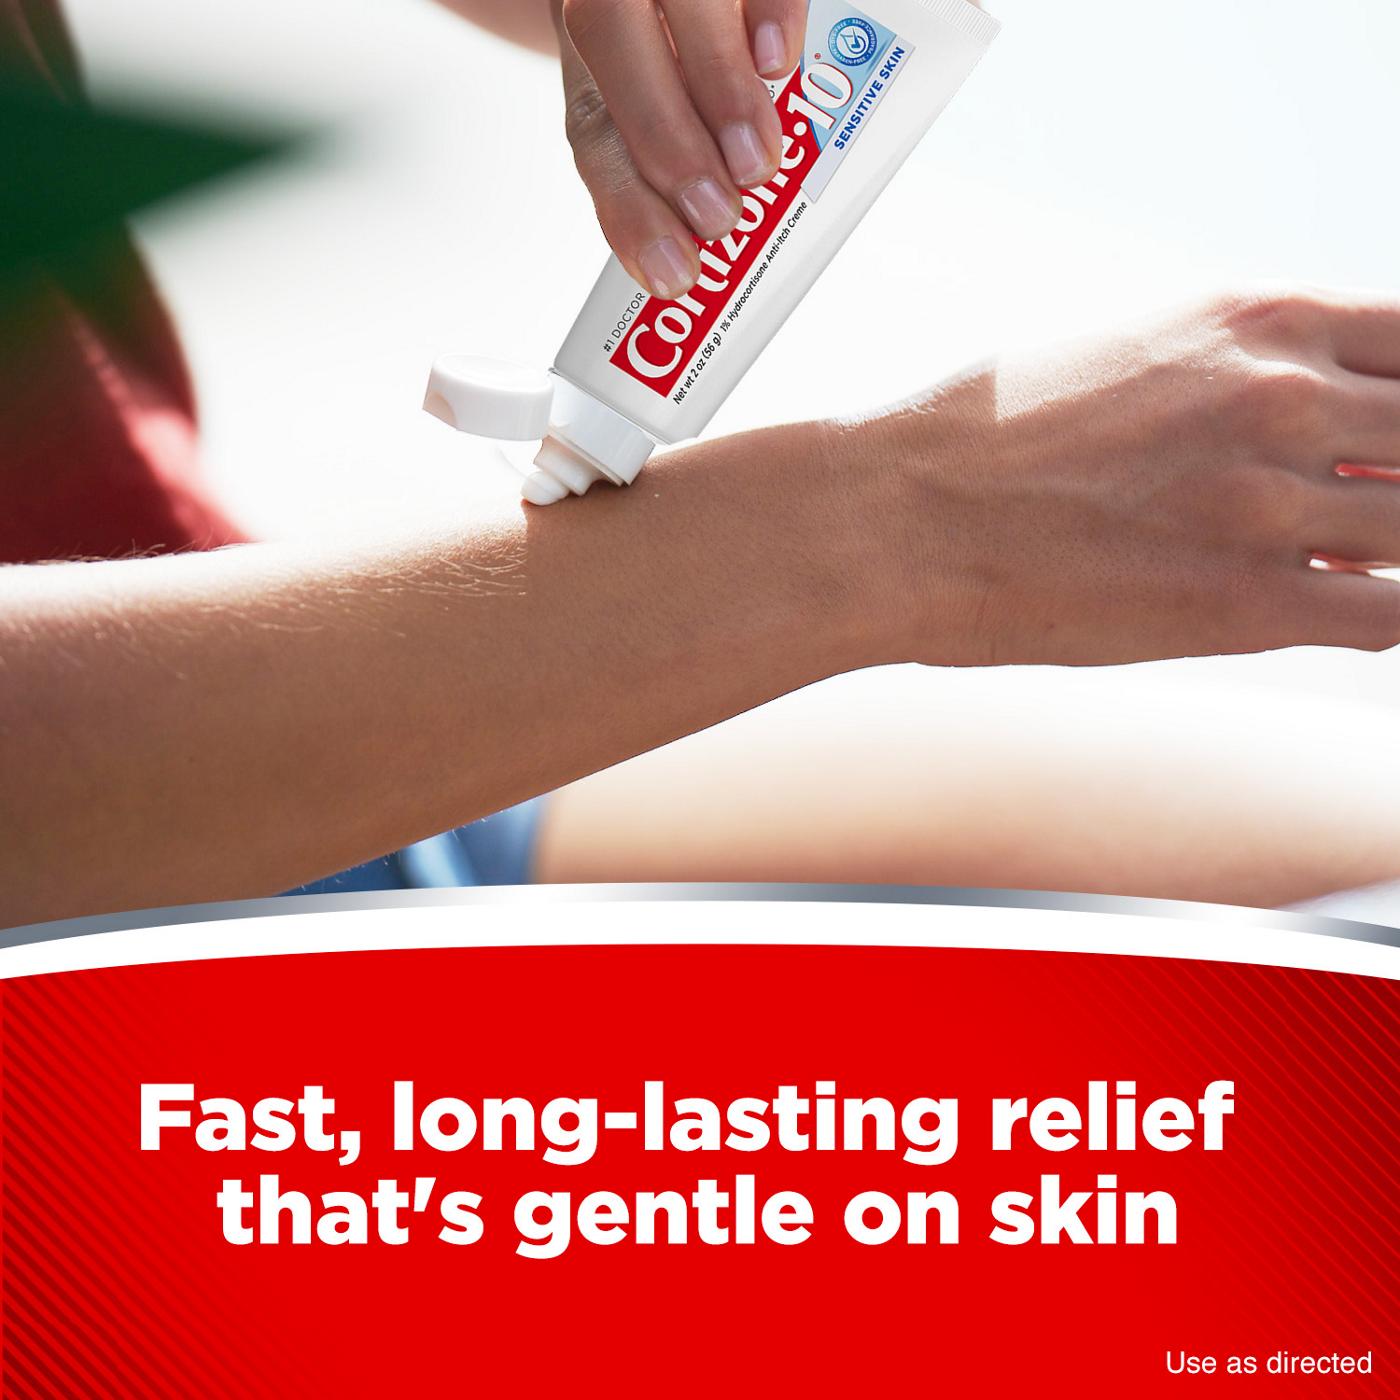 Cortizone 10 Maximum Strength Sensitive Skin Anti-Itch Cream; image 7 of 10